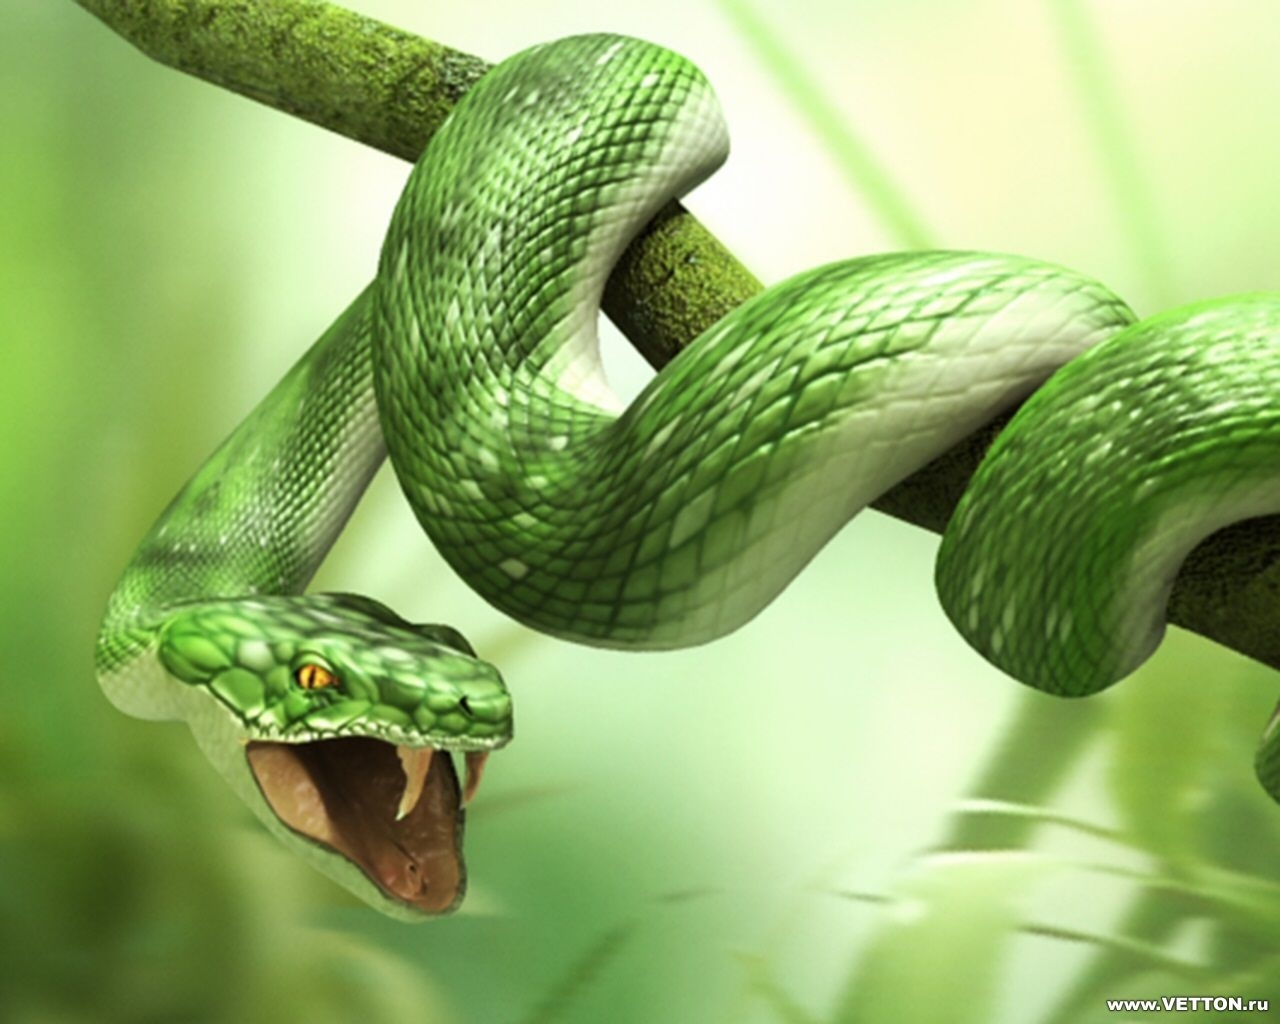 snakes, animals, art, green Full HD